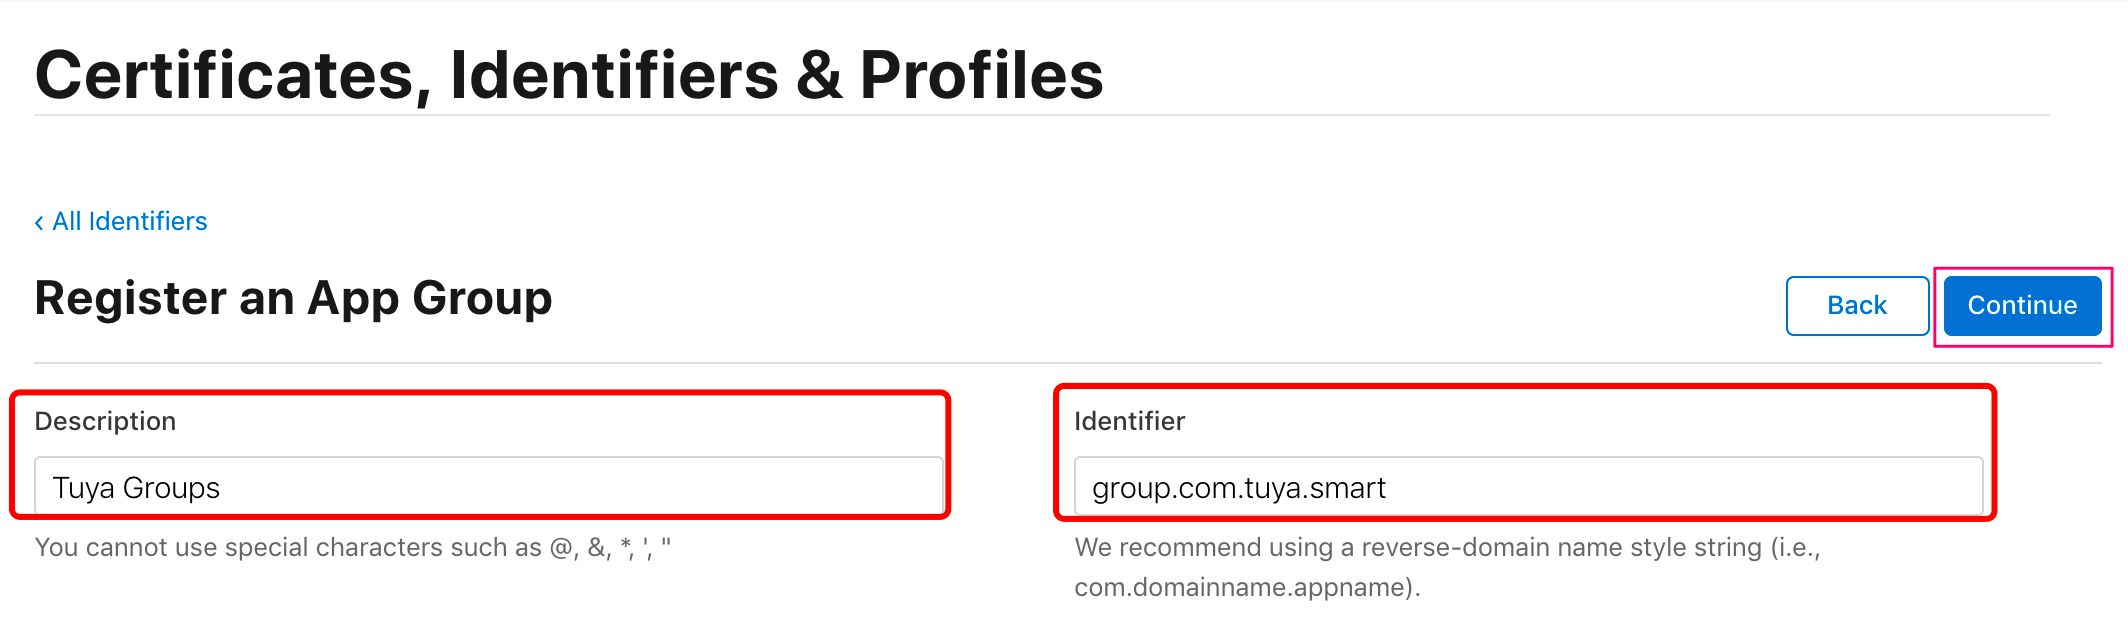 Configure Matter Certificate Profiles